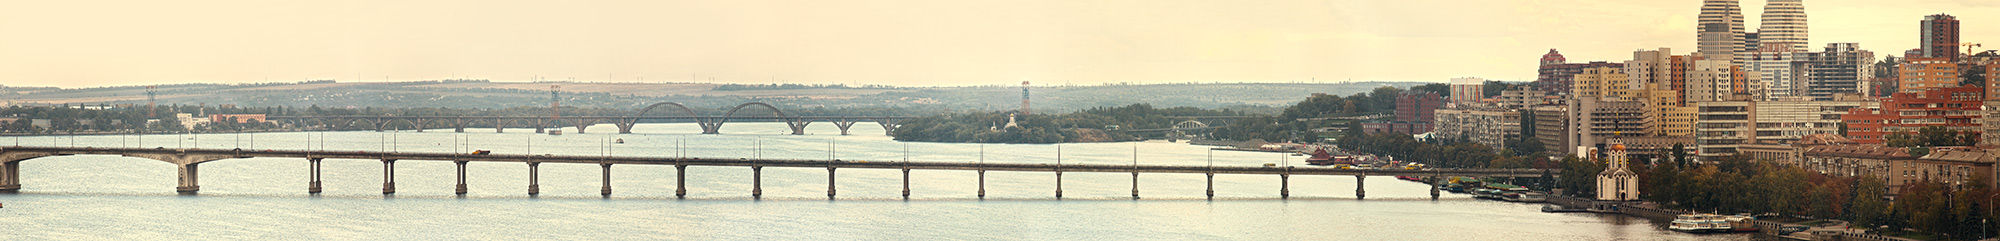 Фотообои Днепропетровск панорама мост (city-0000939)